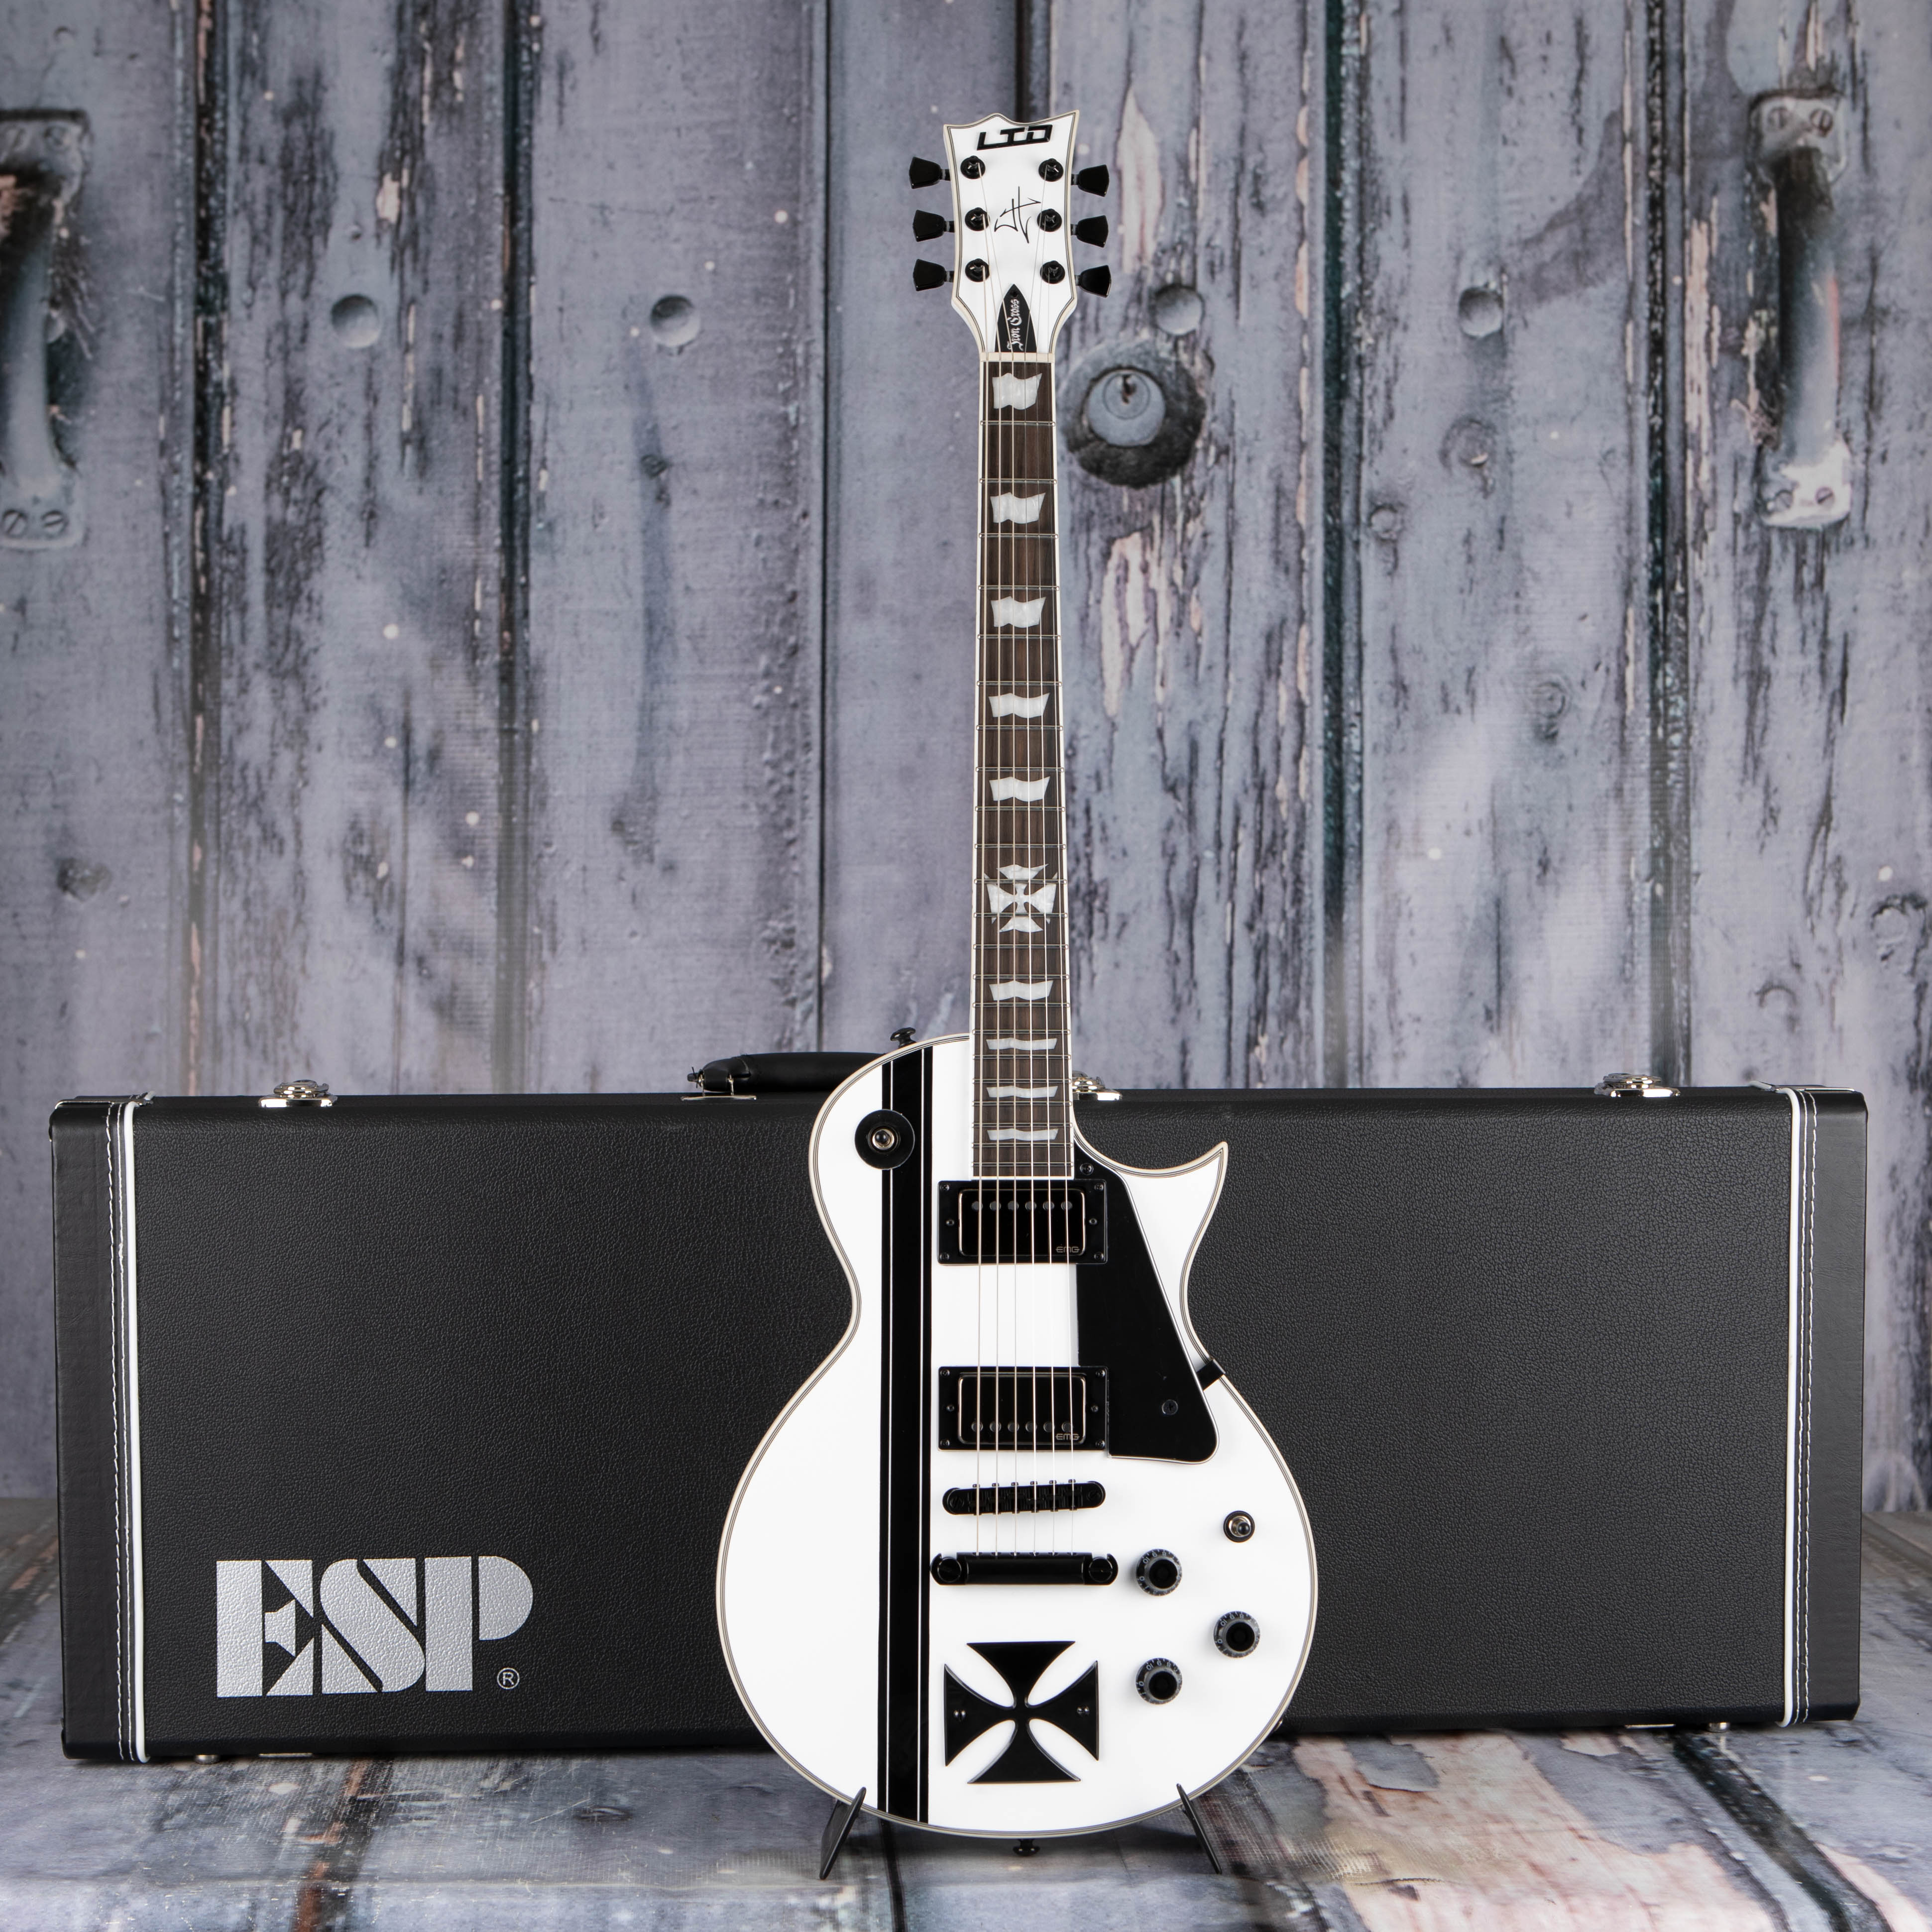 ESP LTD Iron Cross James Hetfield Signature Series Electric Guitar, Snow White, case